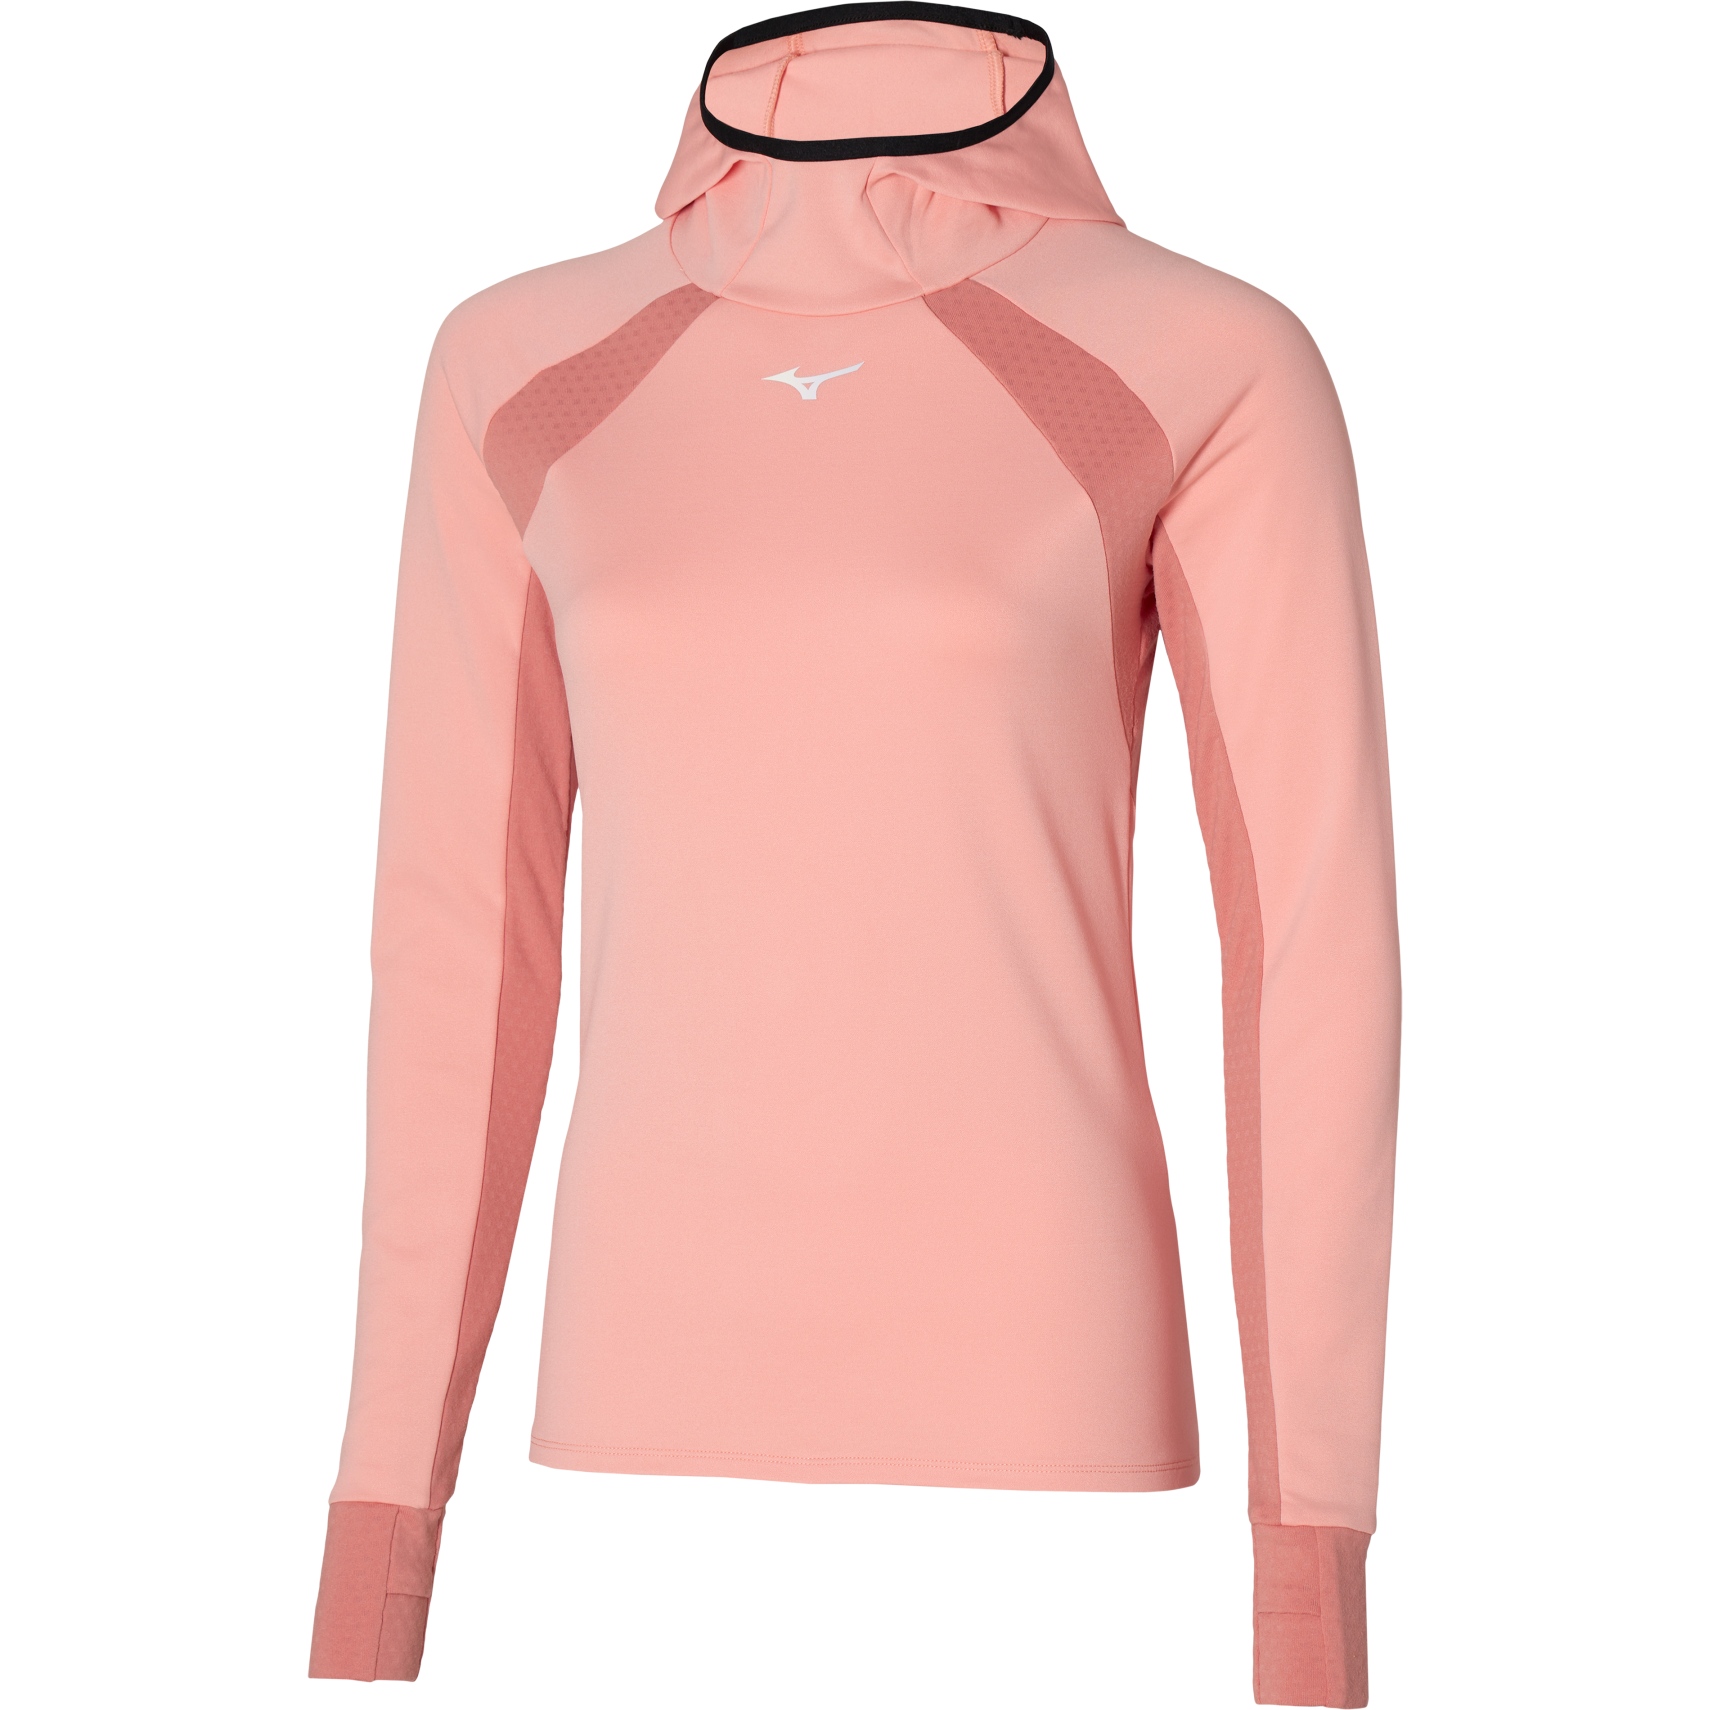 Productfoto van Mizuno Warmalite Shirt met Lange Mouwen en Capuchon Dames - Apricot Blush